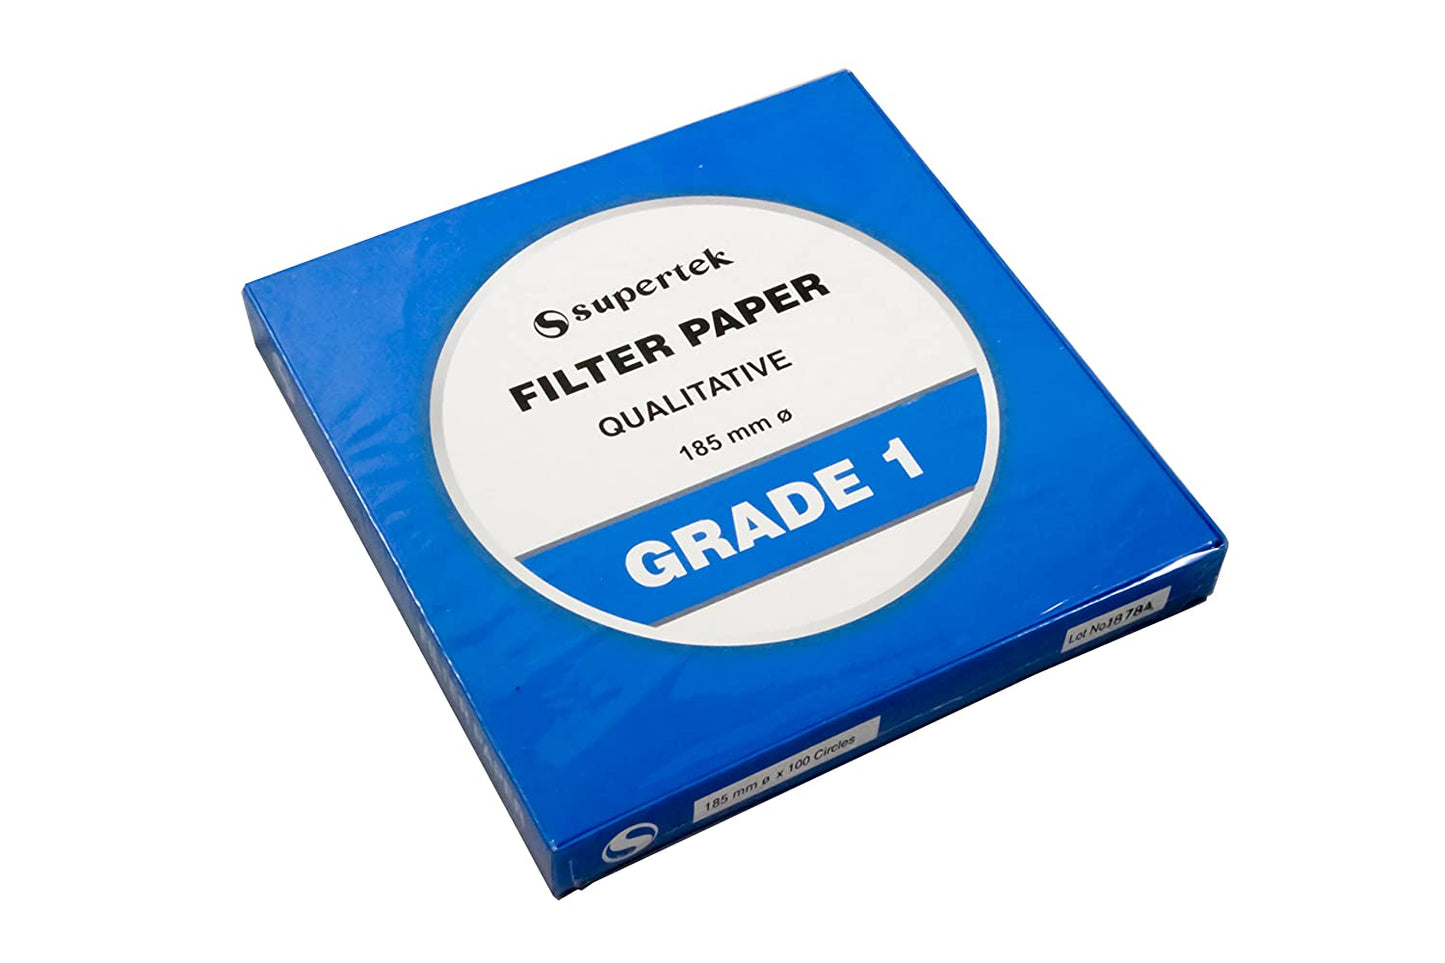 Filter Paper, Qualitative, Grade 1, 185 mm Pack of 100 Sheets